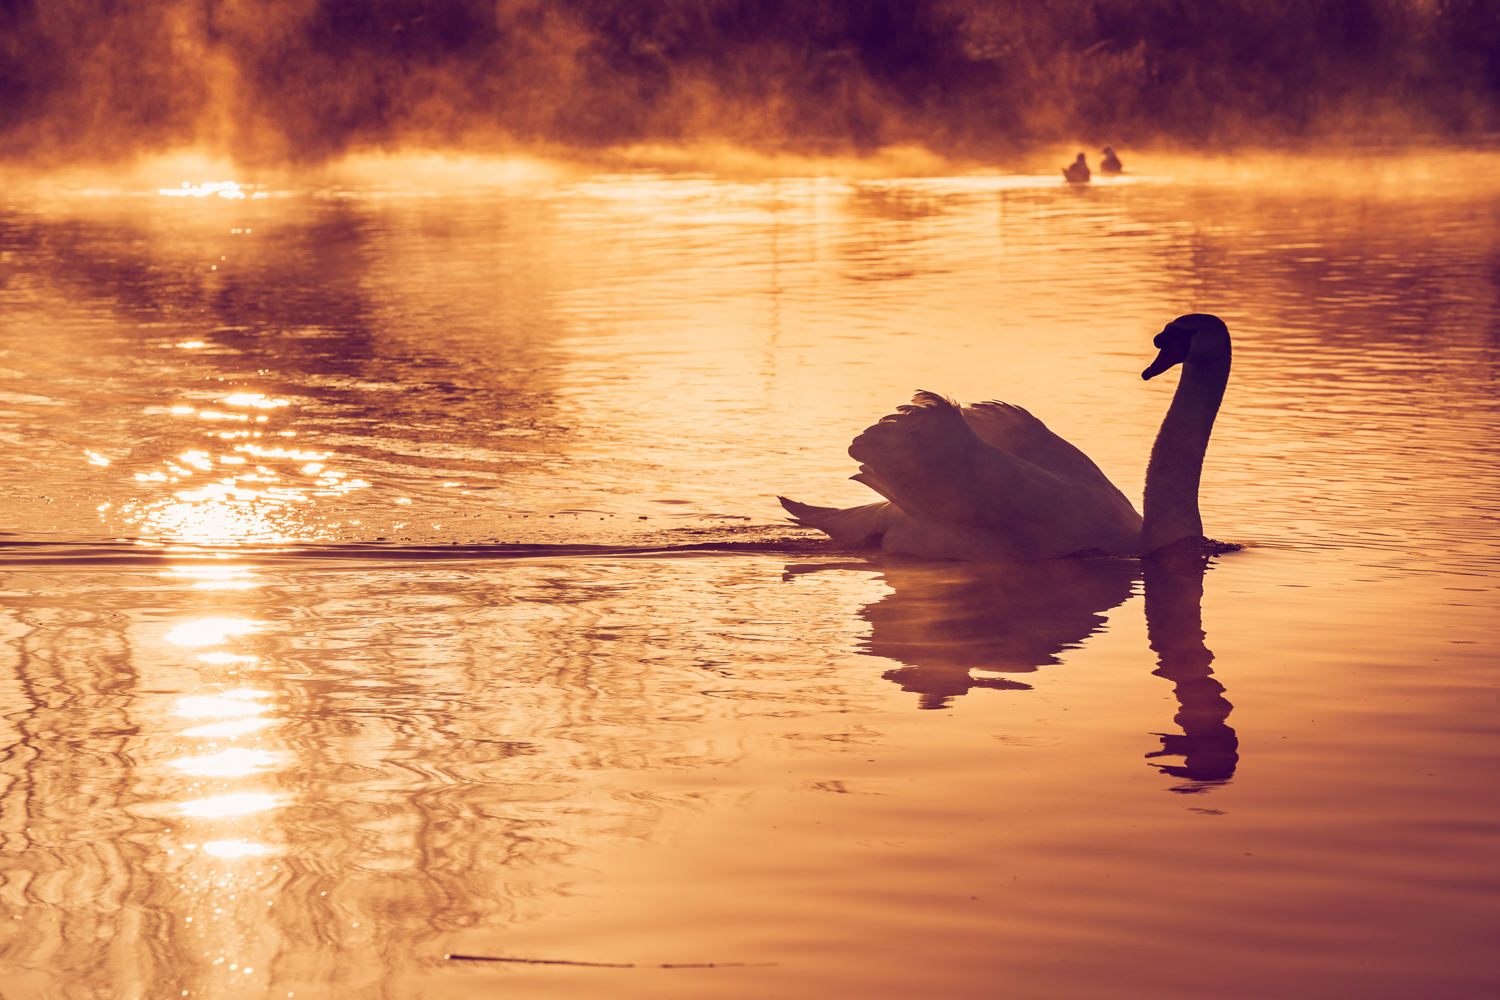 A swan swimming at sunrise